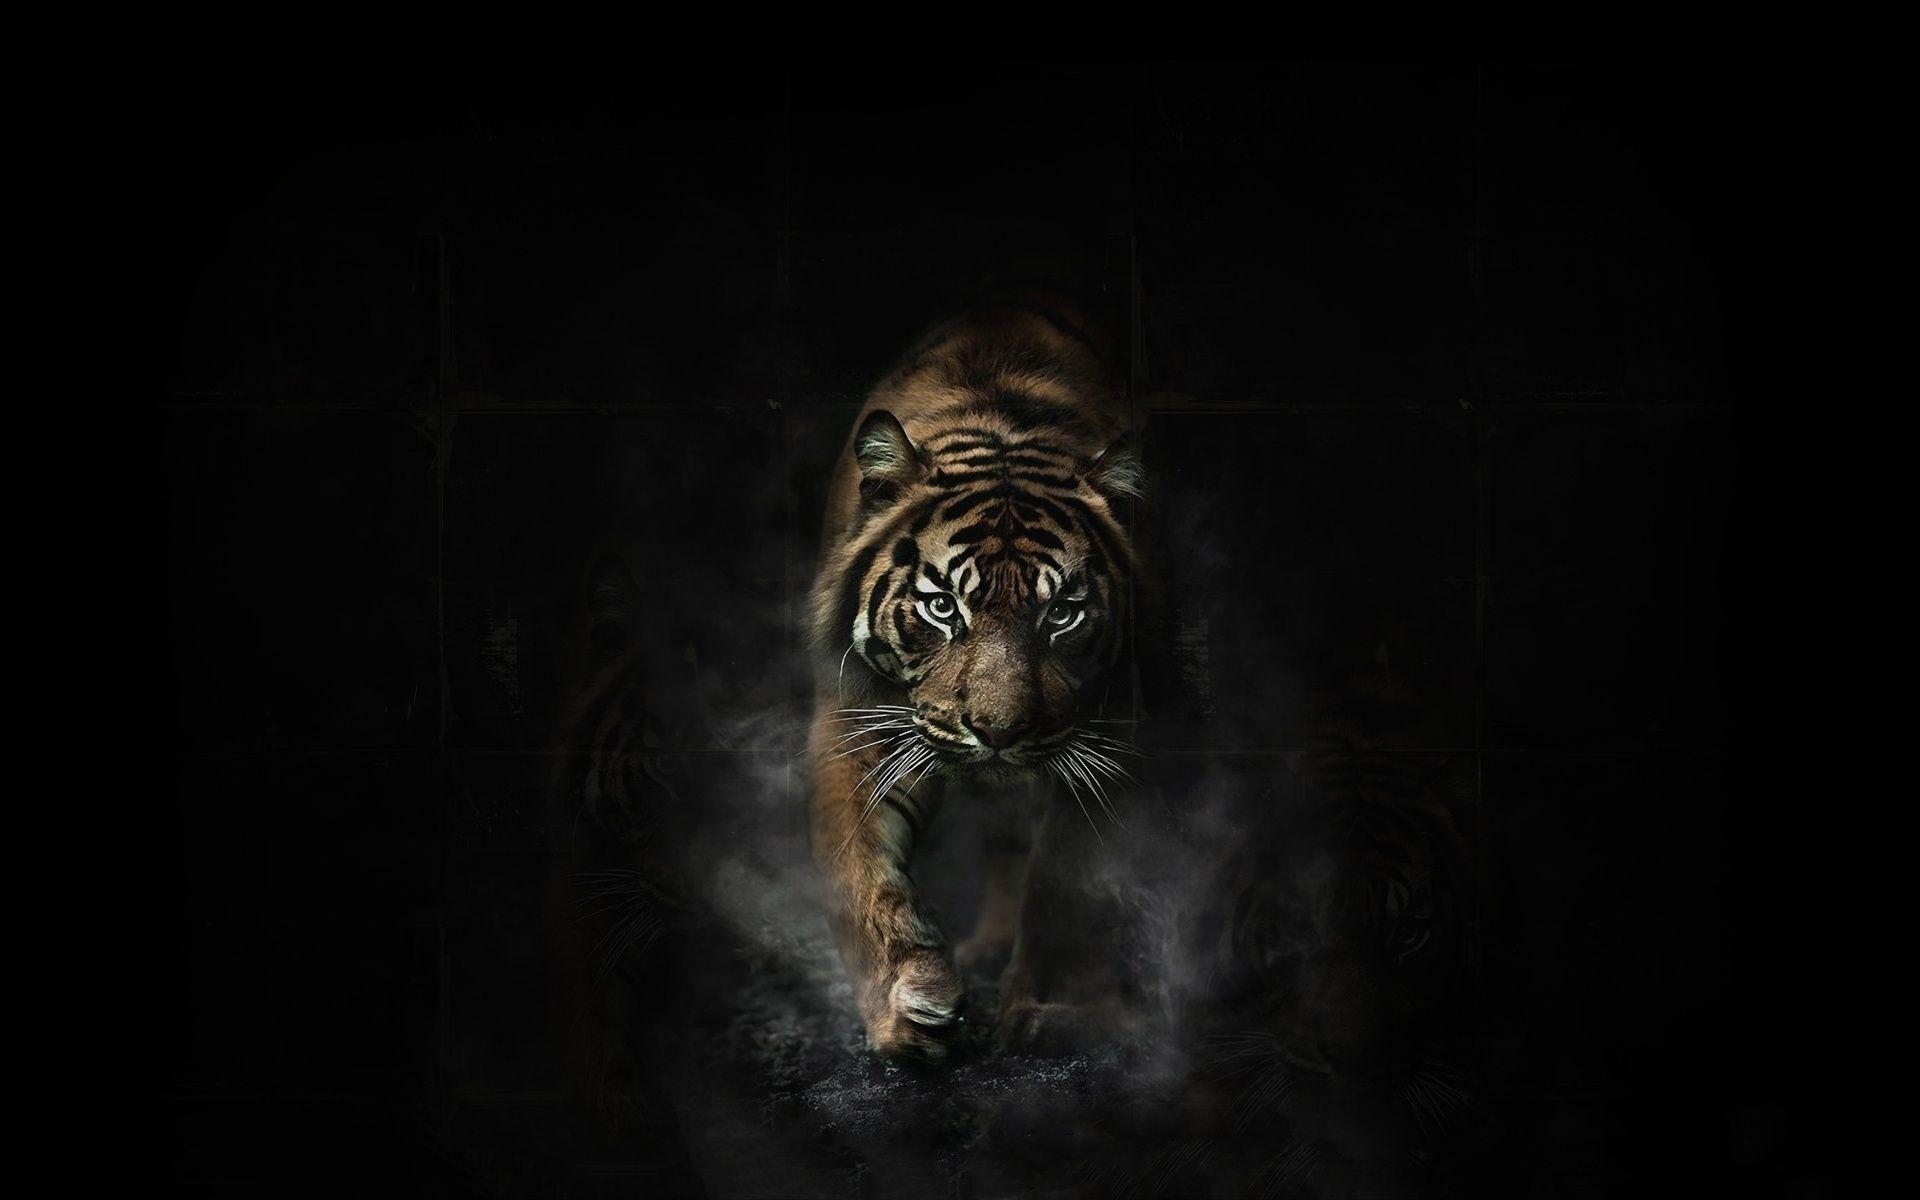 Cool Wallpaper of Tigers